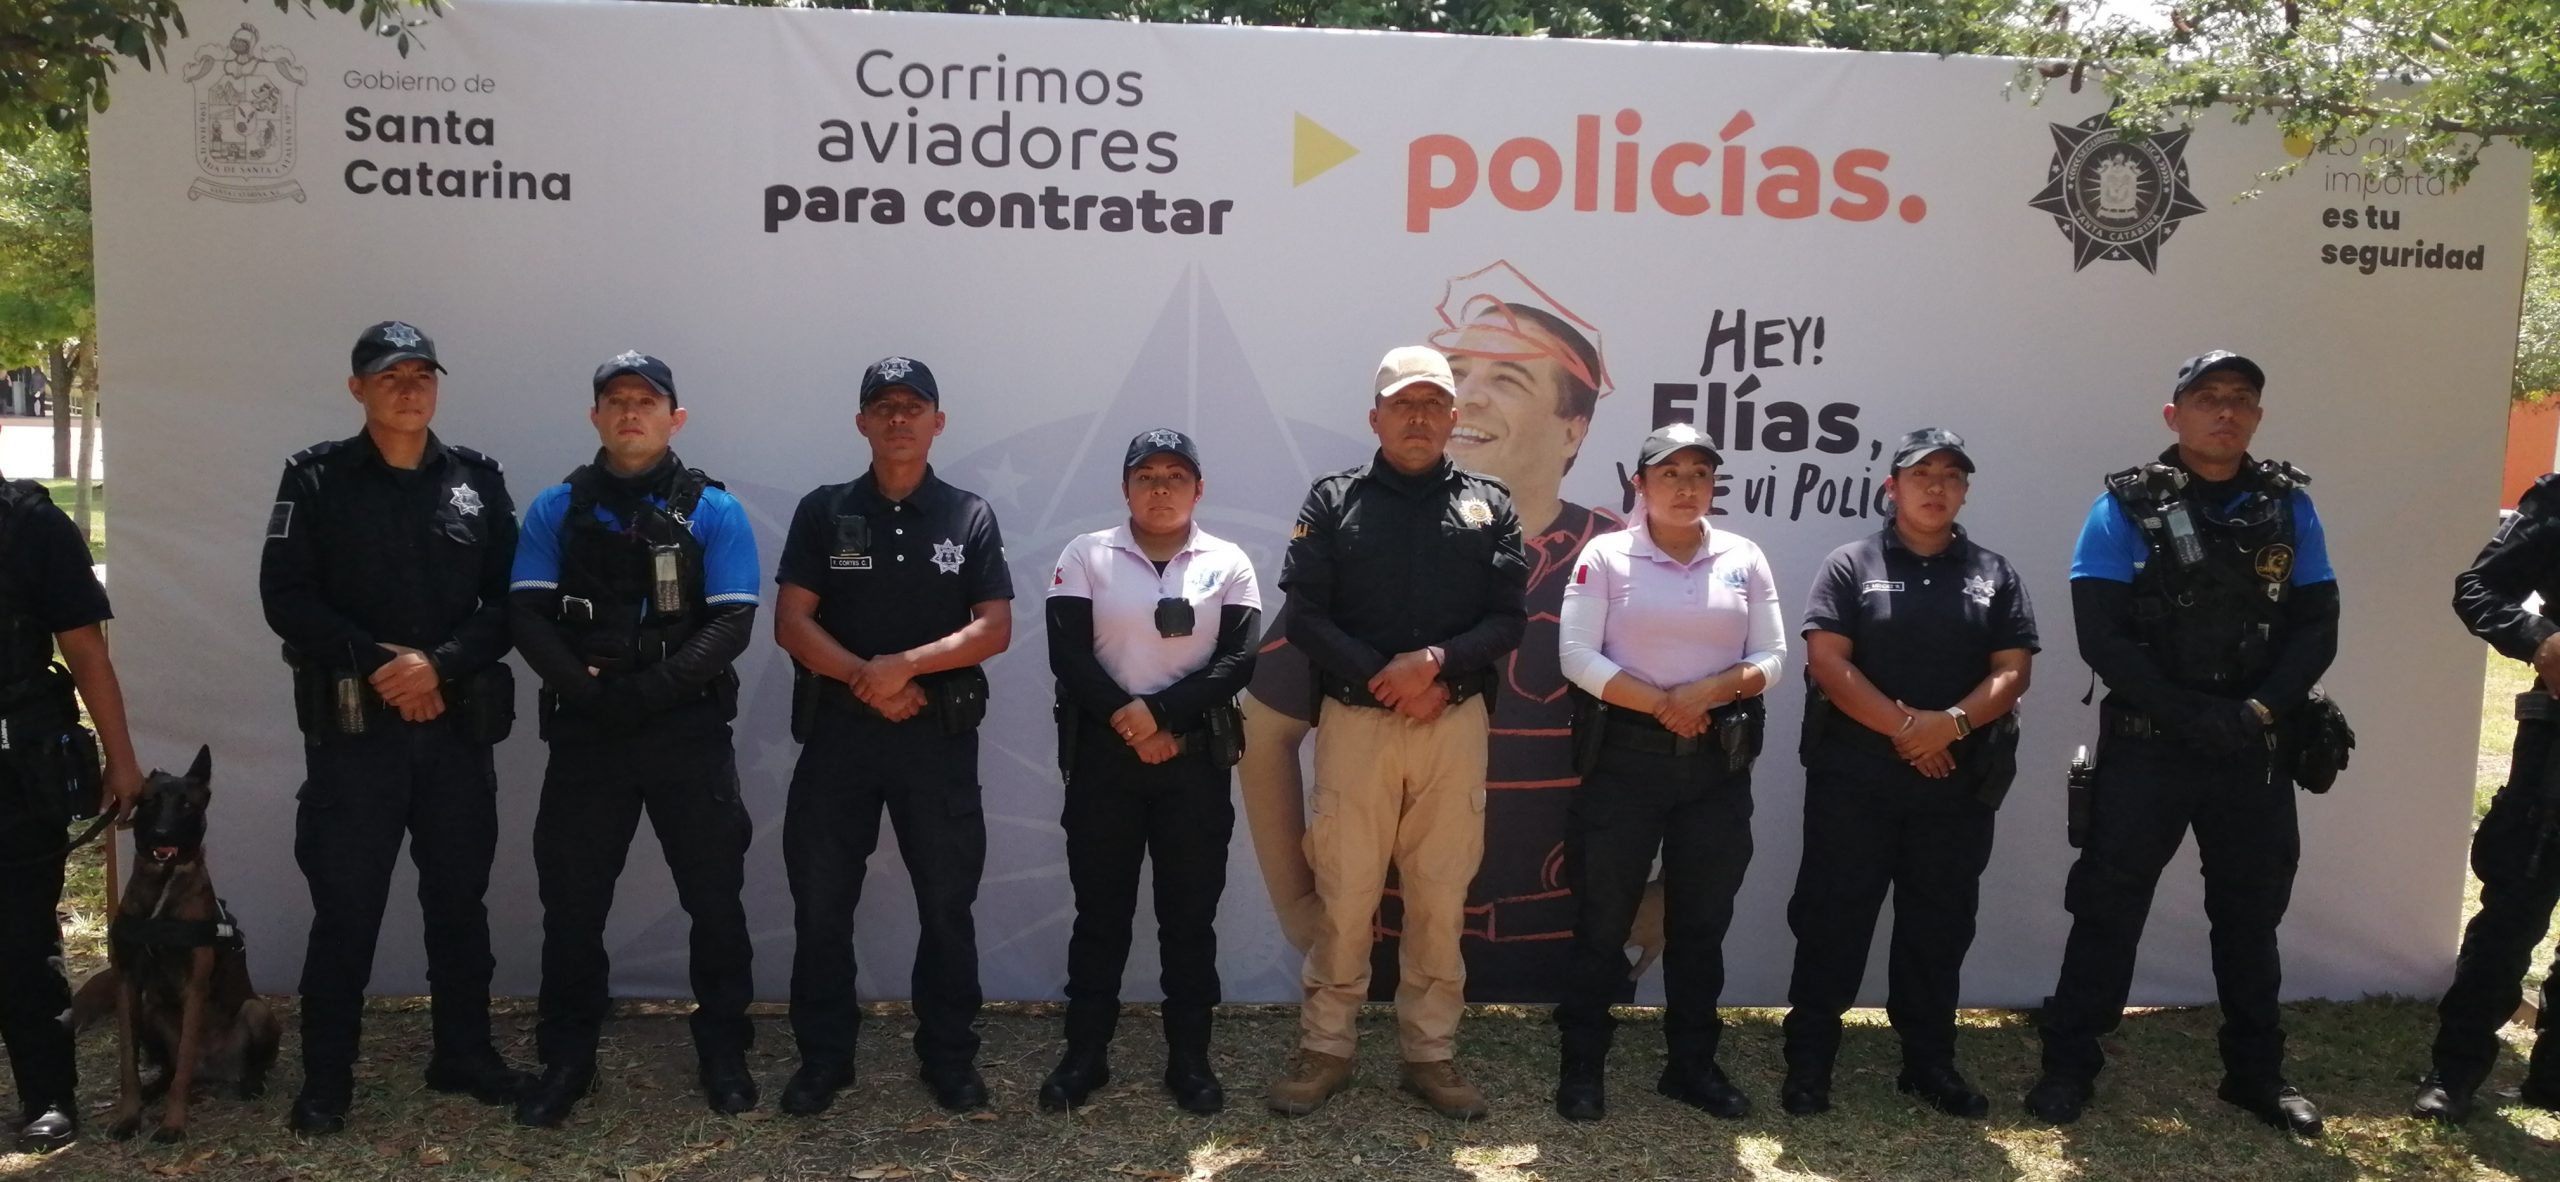 Lanzan oferta de empleo en Santa Catarina, contratará 200 policías